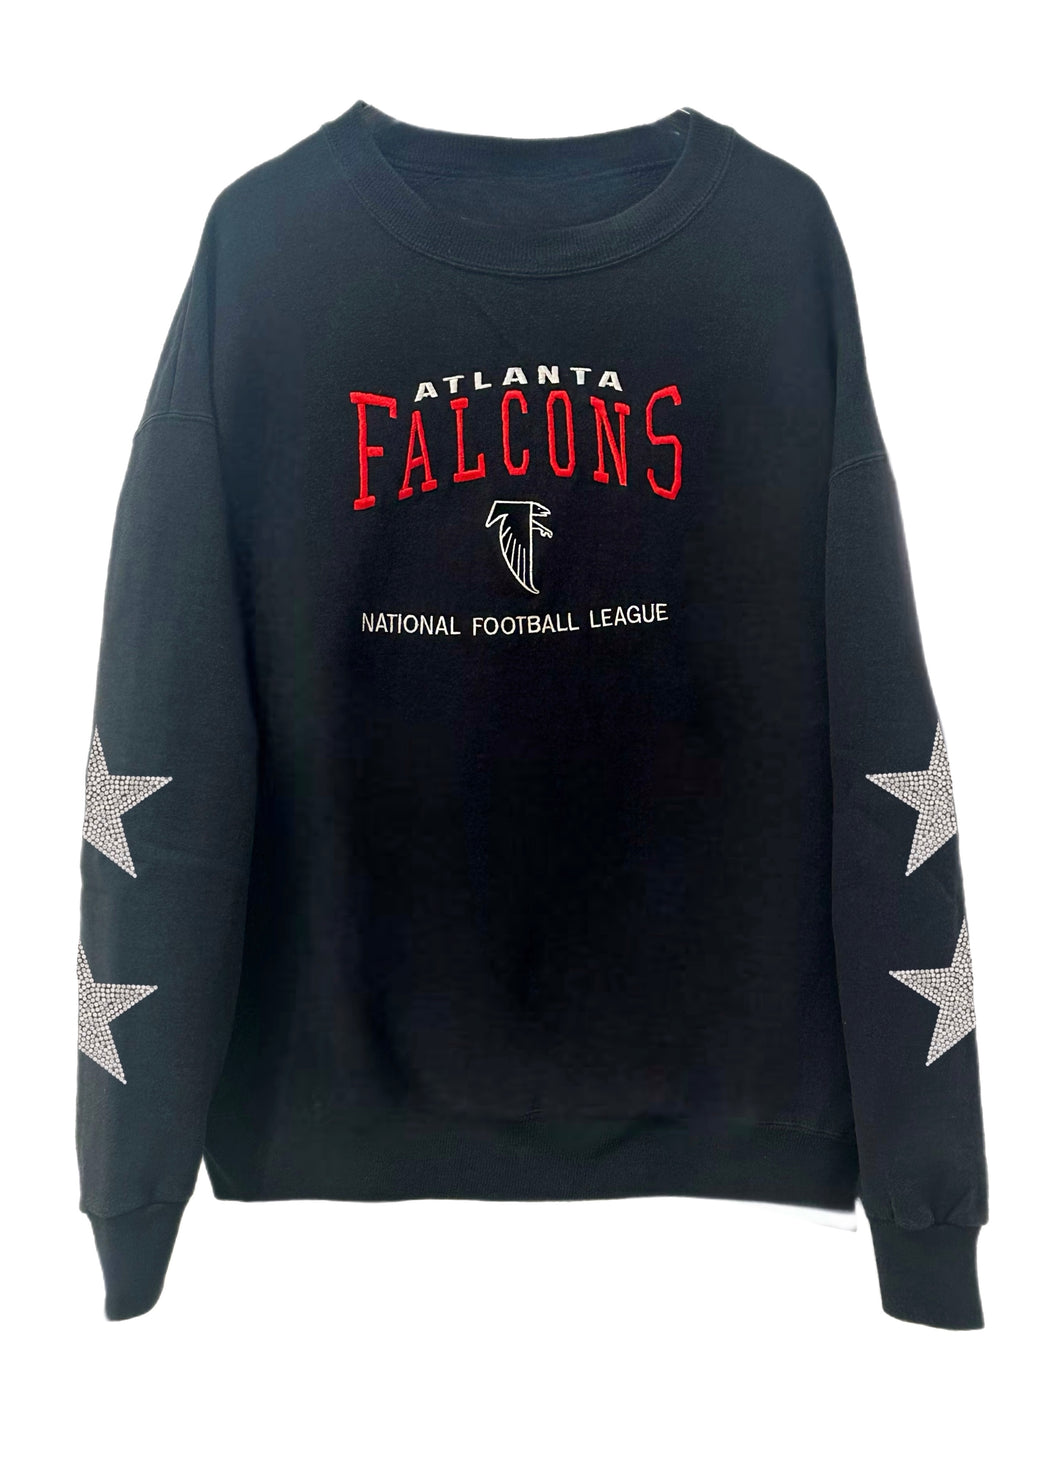 Atlanta Falcons, NFL One of a KIND Vintage Sweatshirt with Crystal Star Design